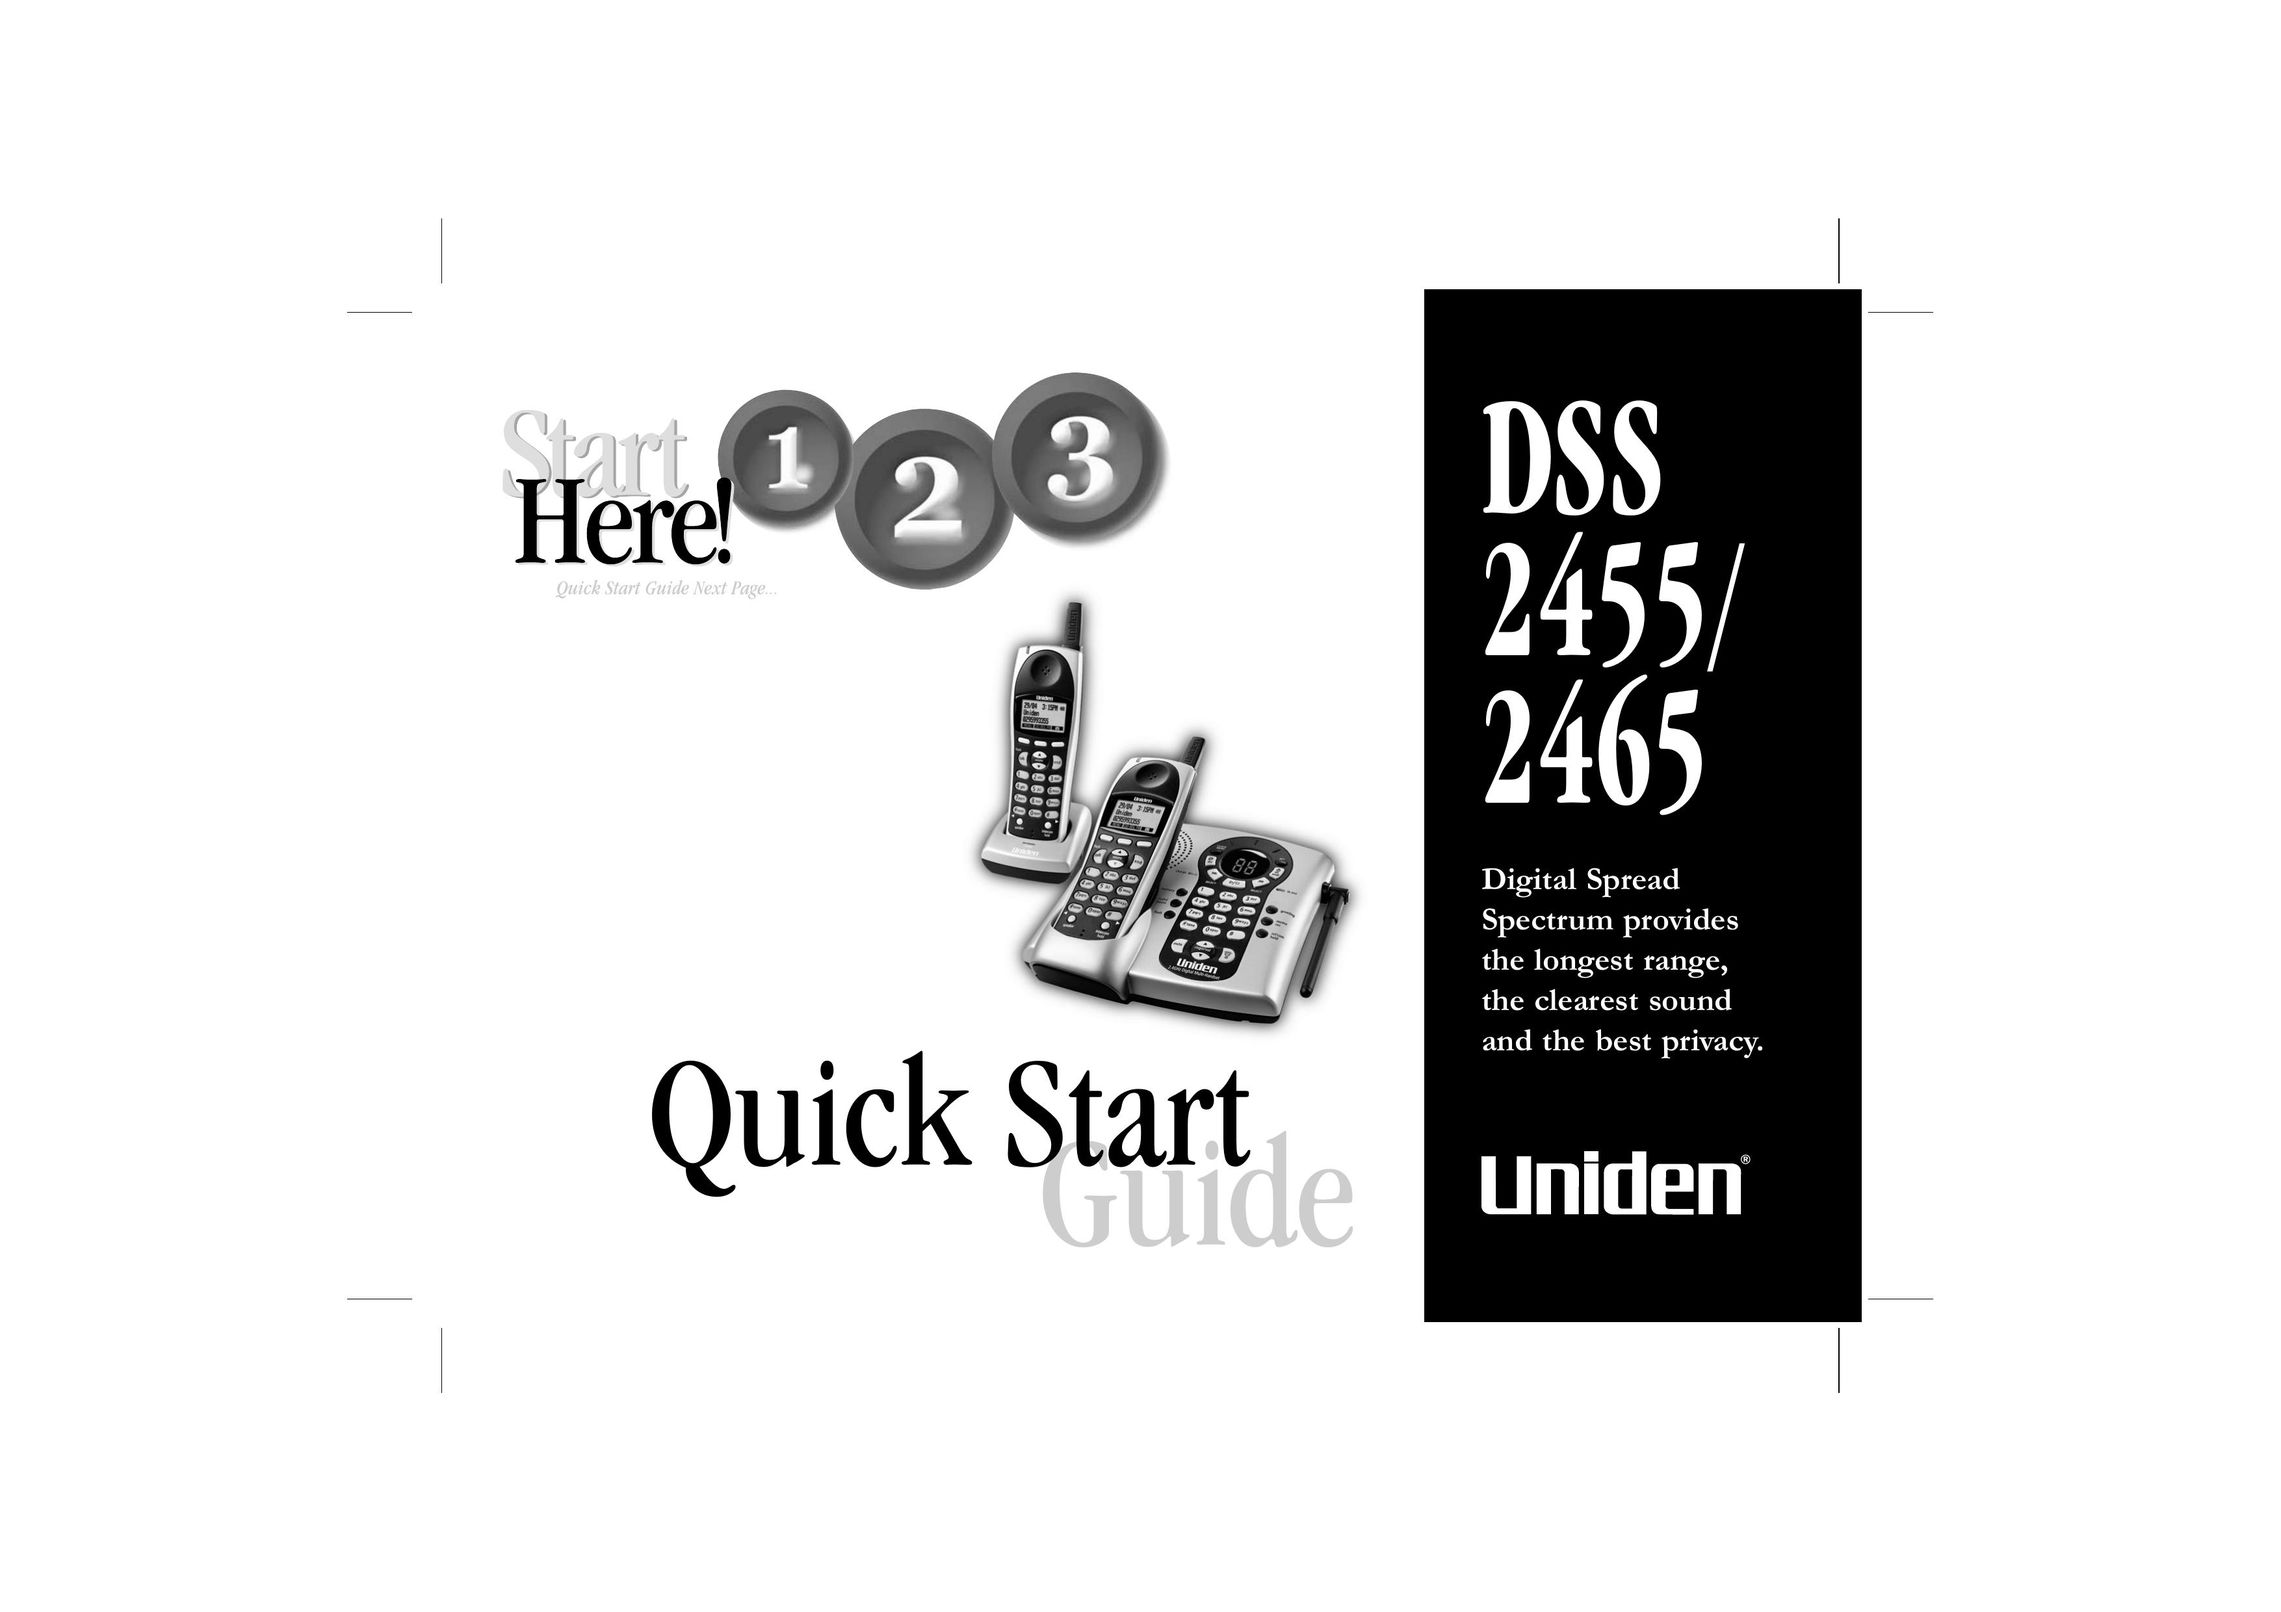 Uniden DSS 2455 Copier User Manual